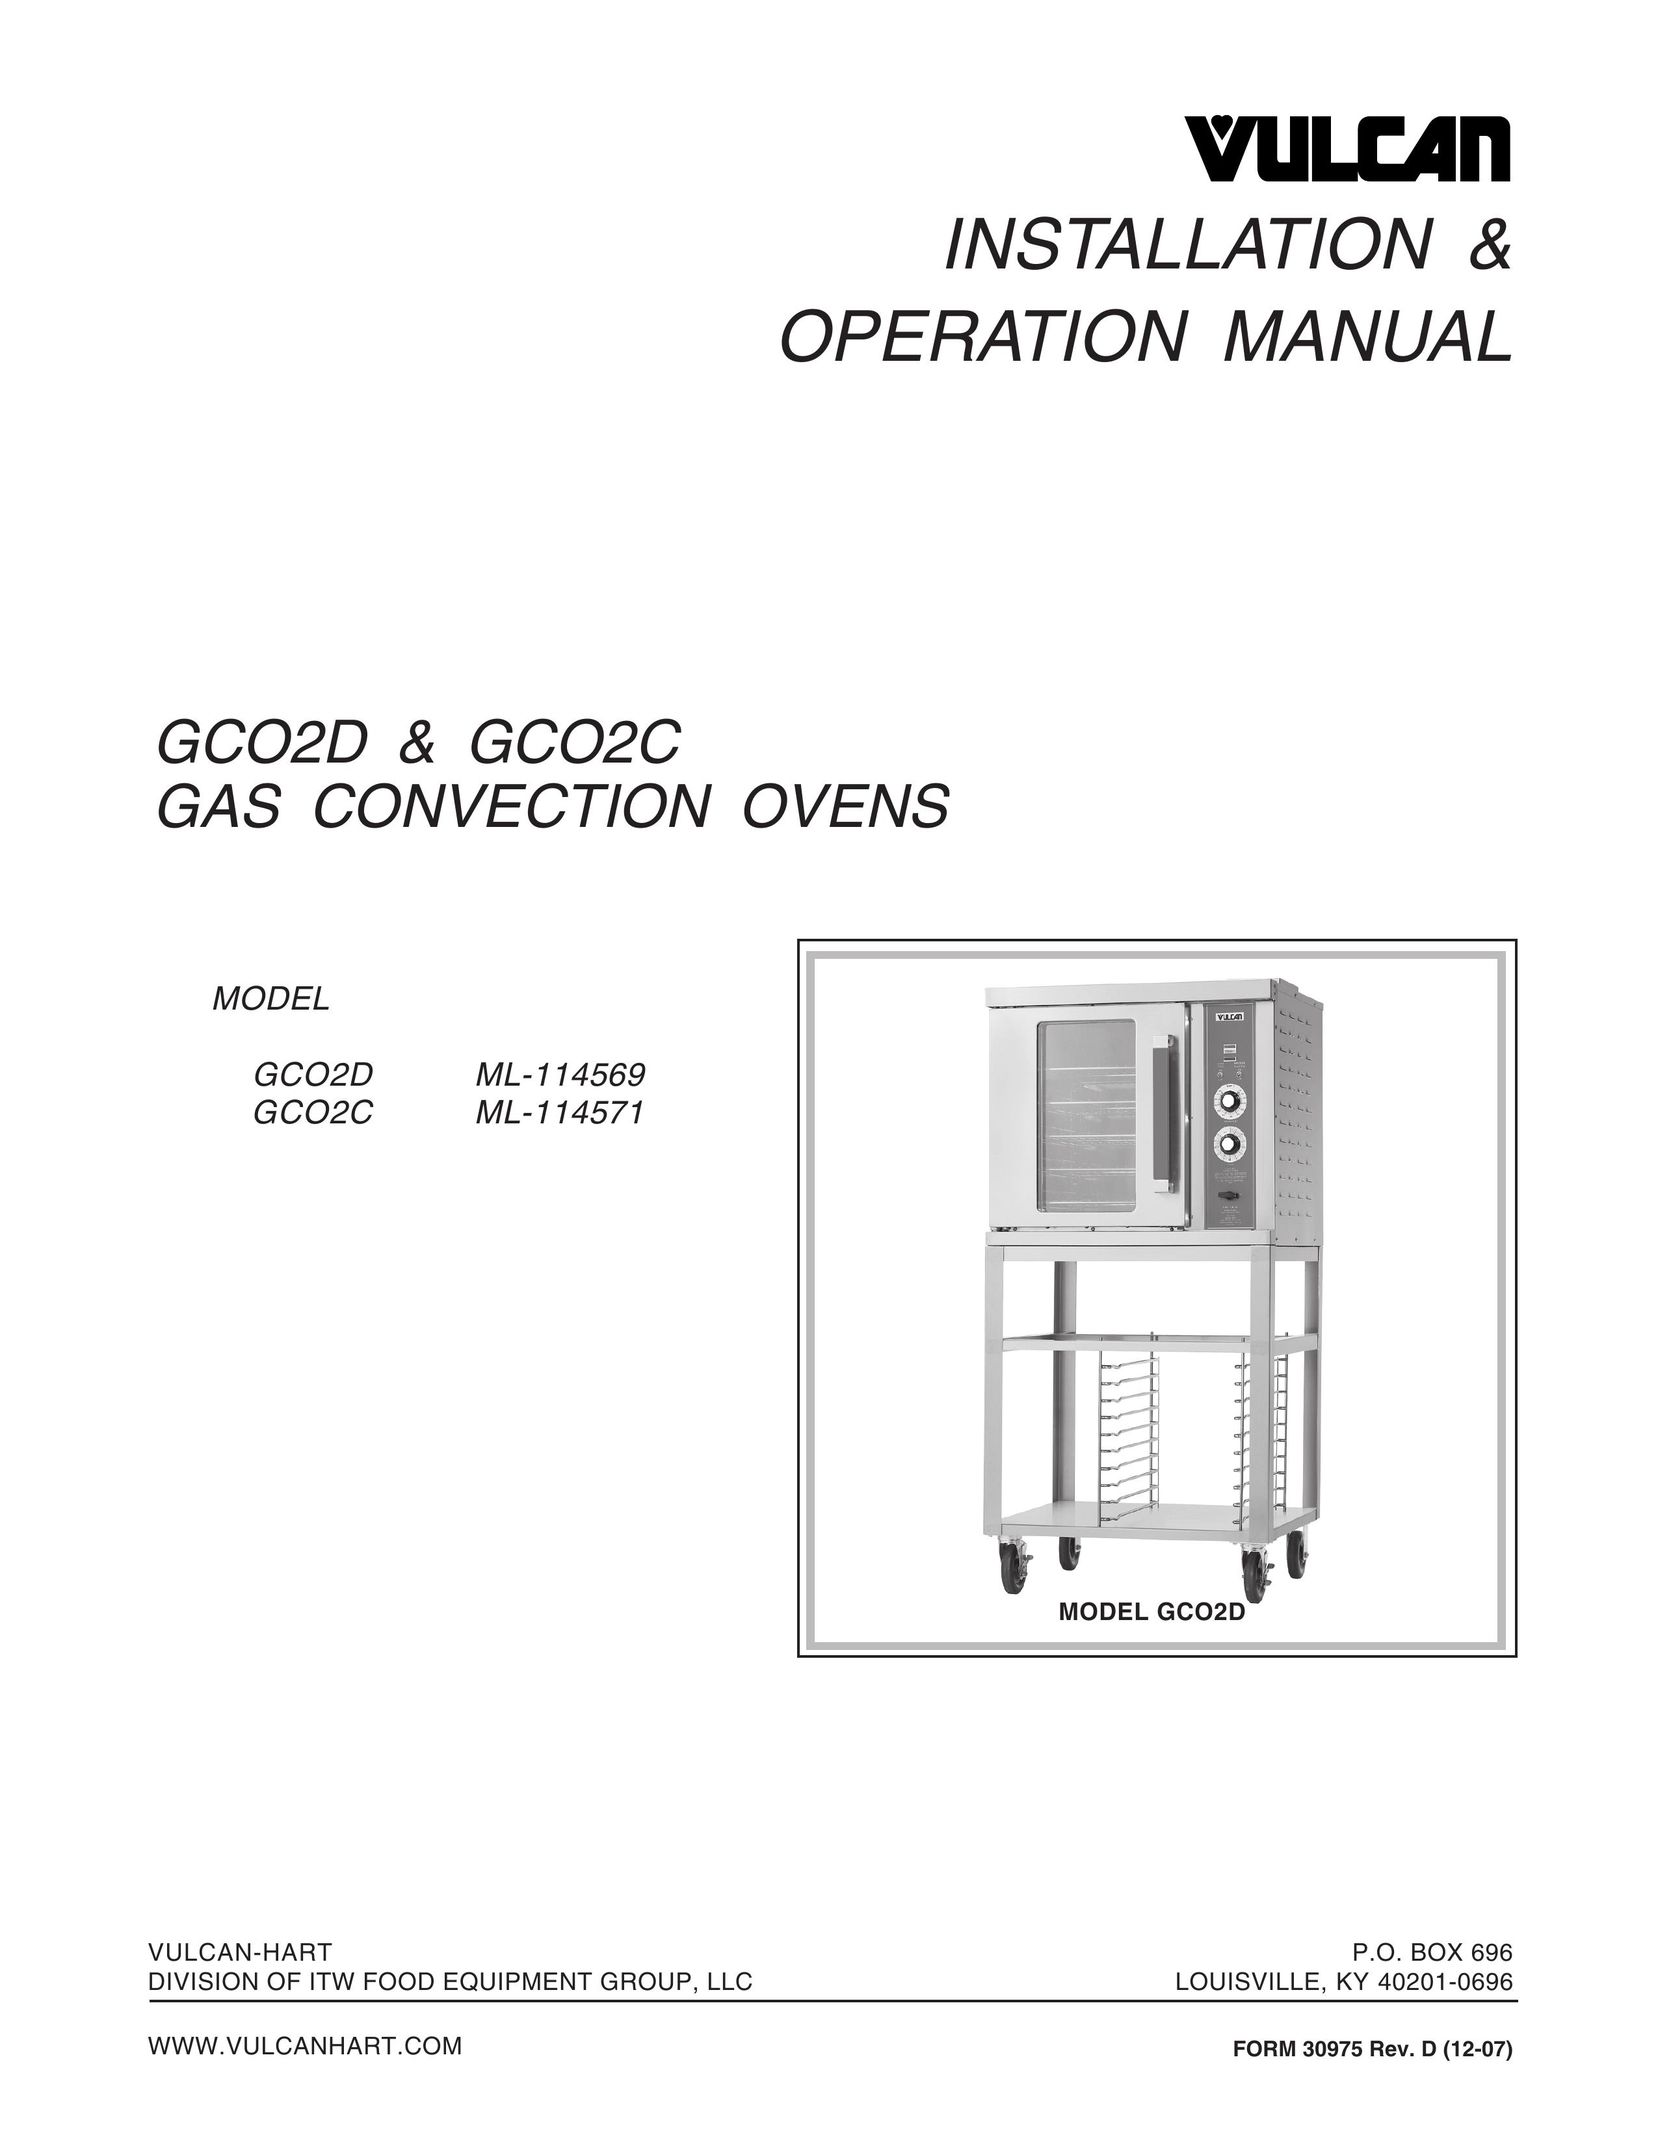 Vulcan-Hart GCO2C ML-114571 Convection Oven User Manual